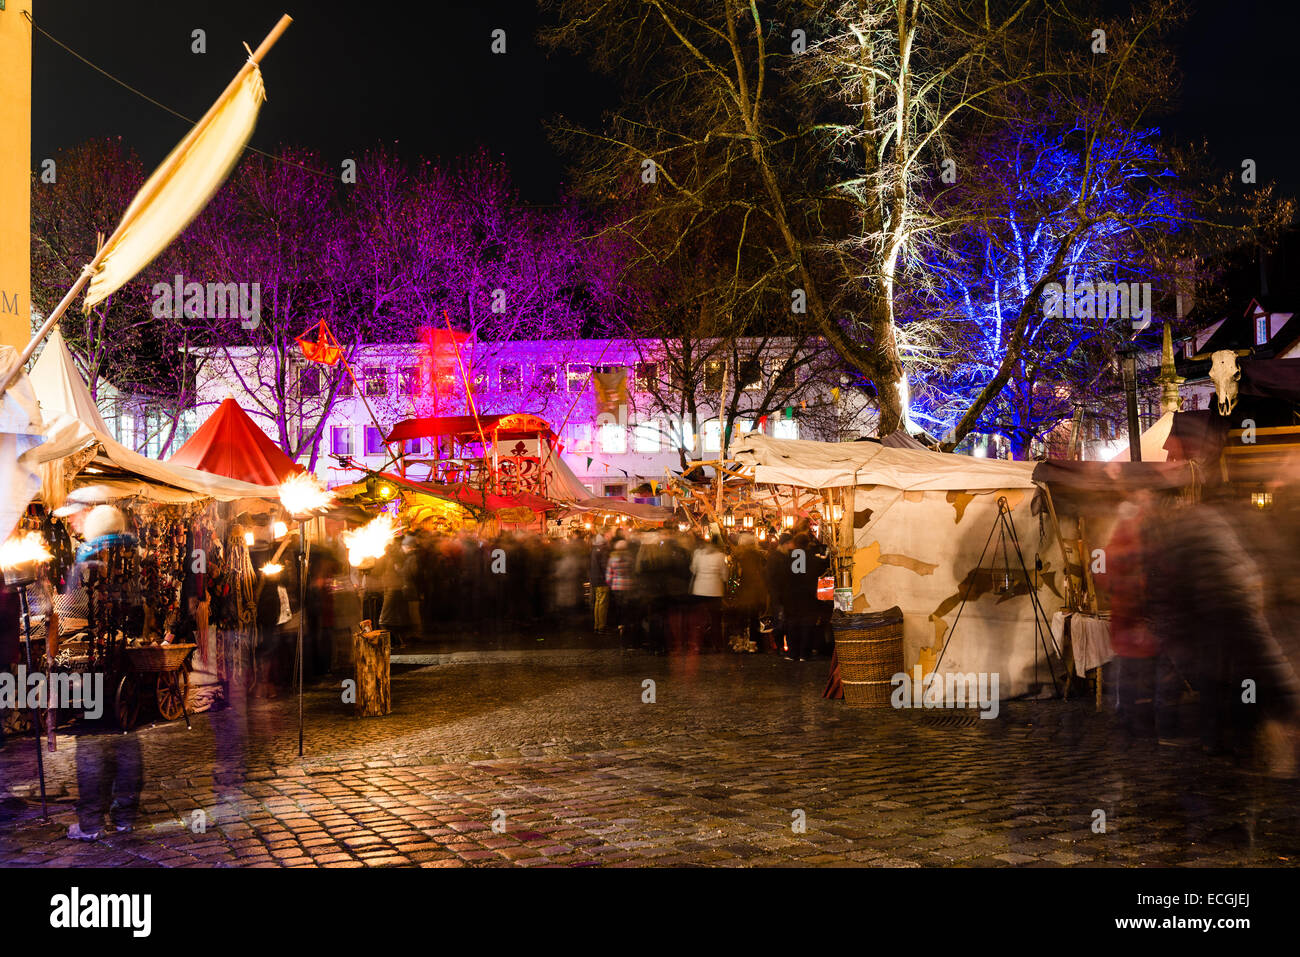 ESSLINGEN, GERMANY - DECEMBER 11, 2014: People are visiting the Christmas Market at night on December 11, 2014 in Esslingen, Ger Stock Photo